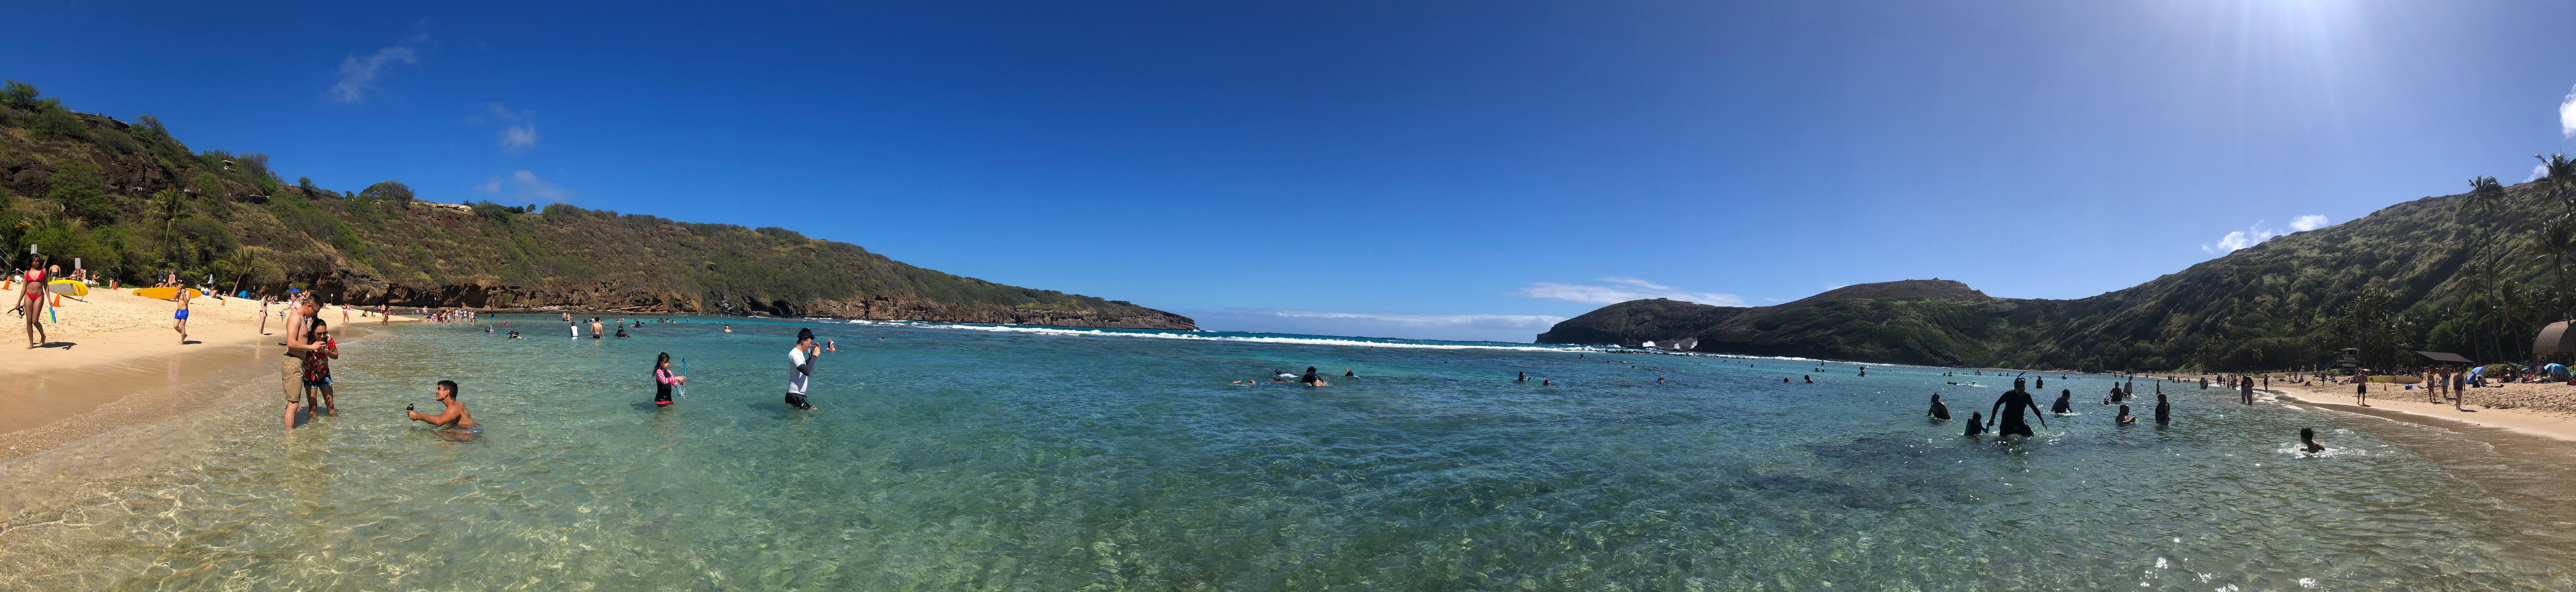 USA Hawaii snorkeling 1